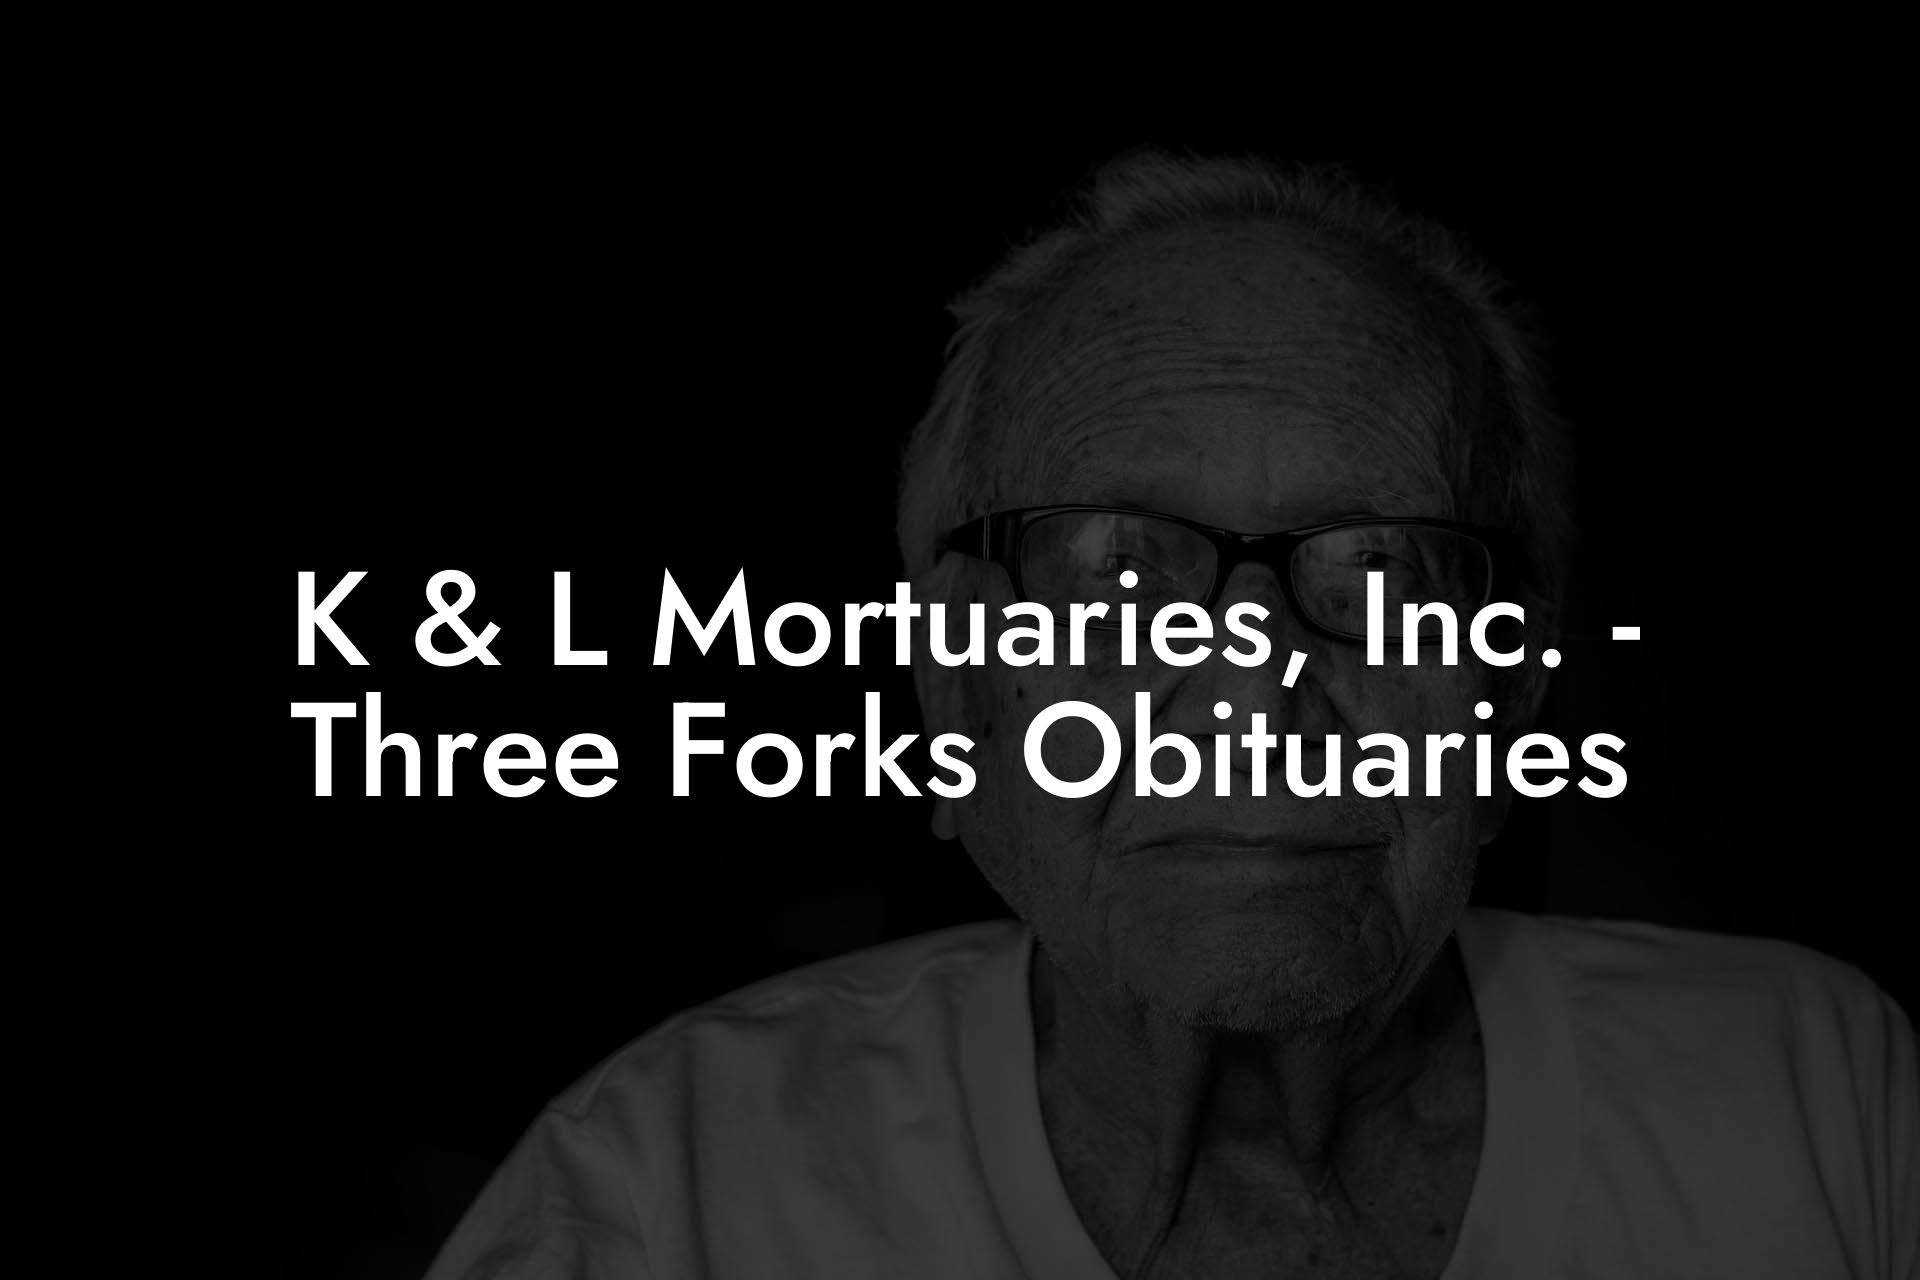 K & L Mortuaries, Inc. - Three Forks Obituaries